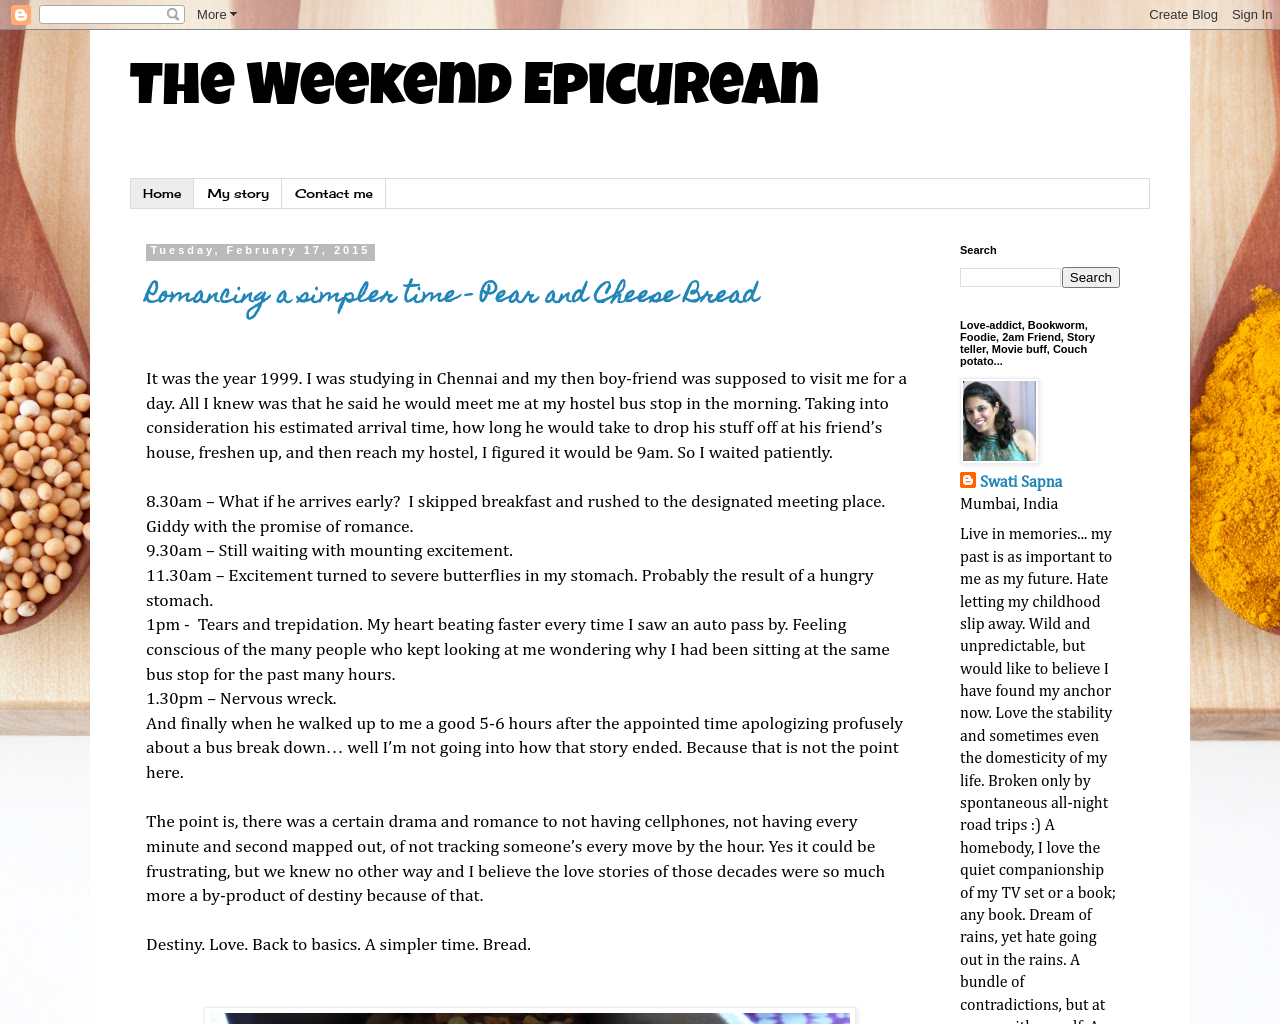 The Weekend Epicurean